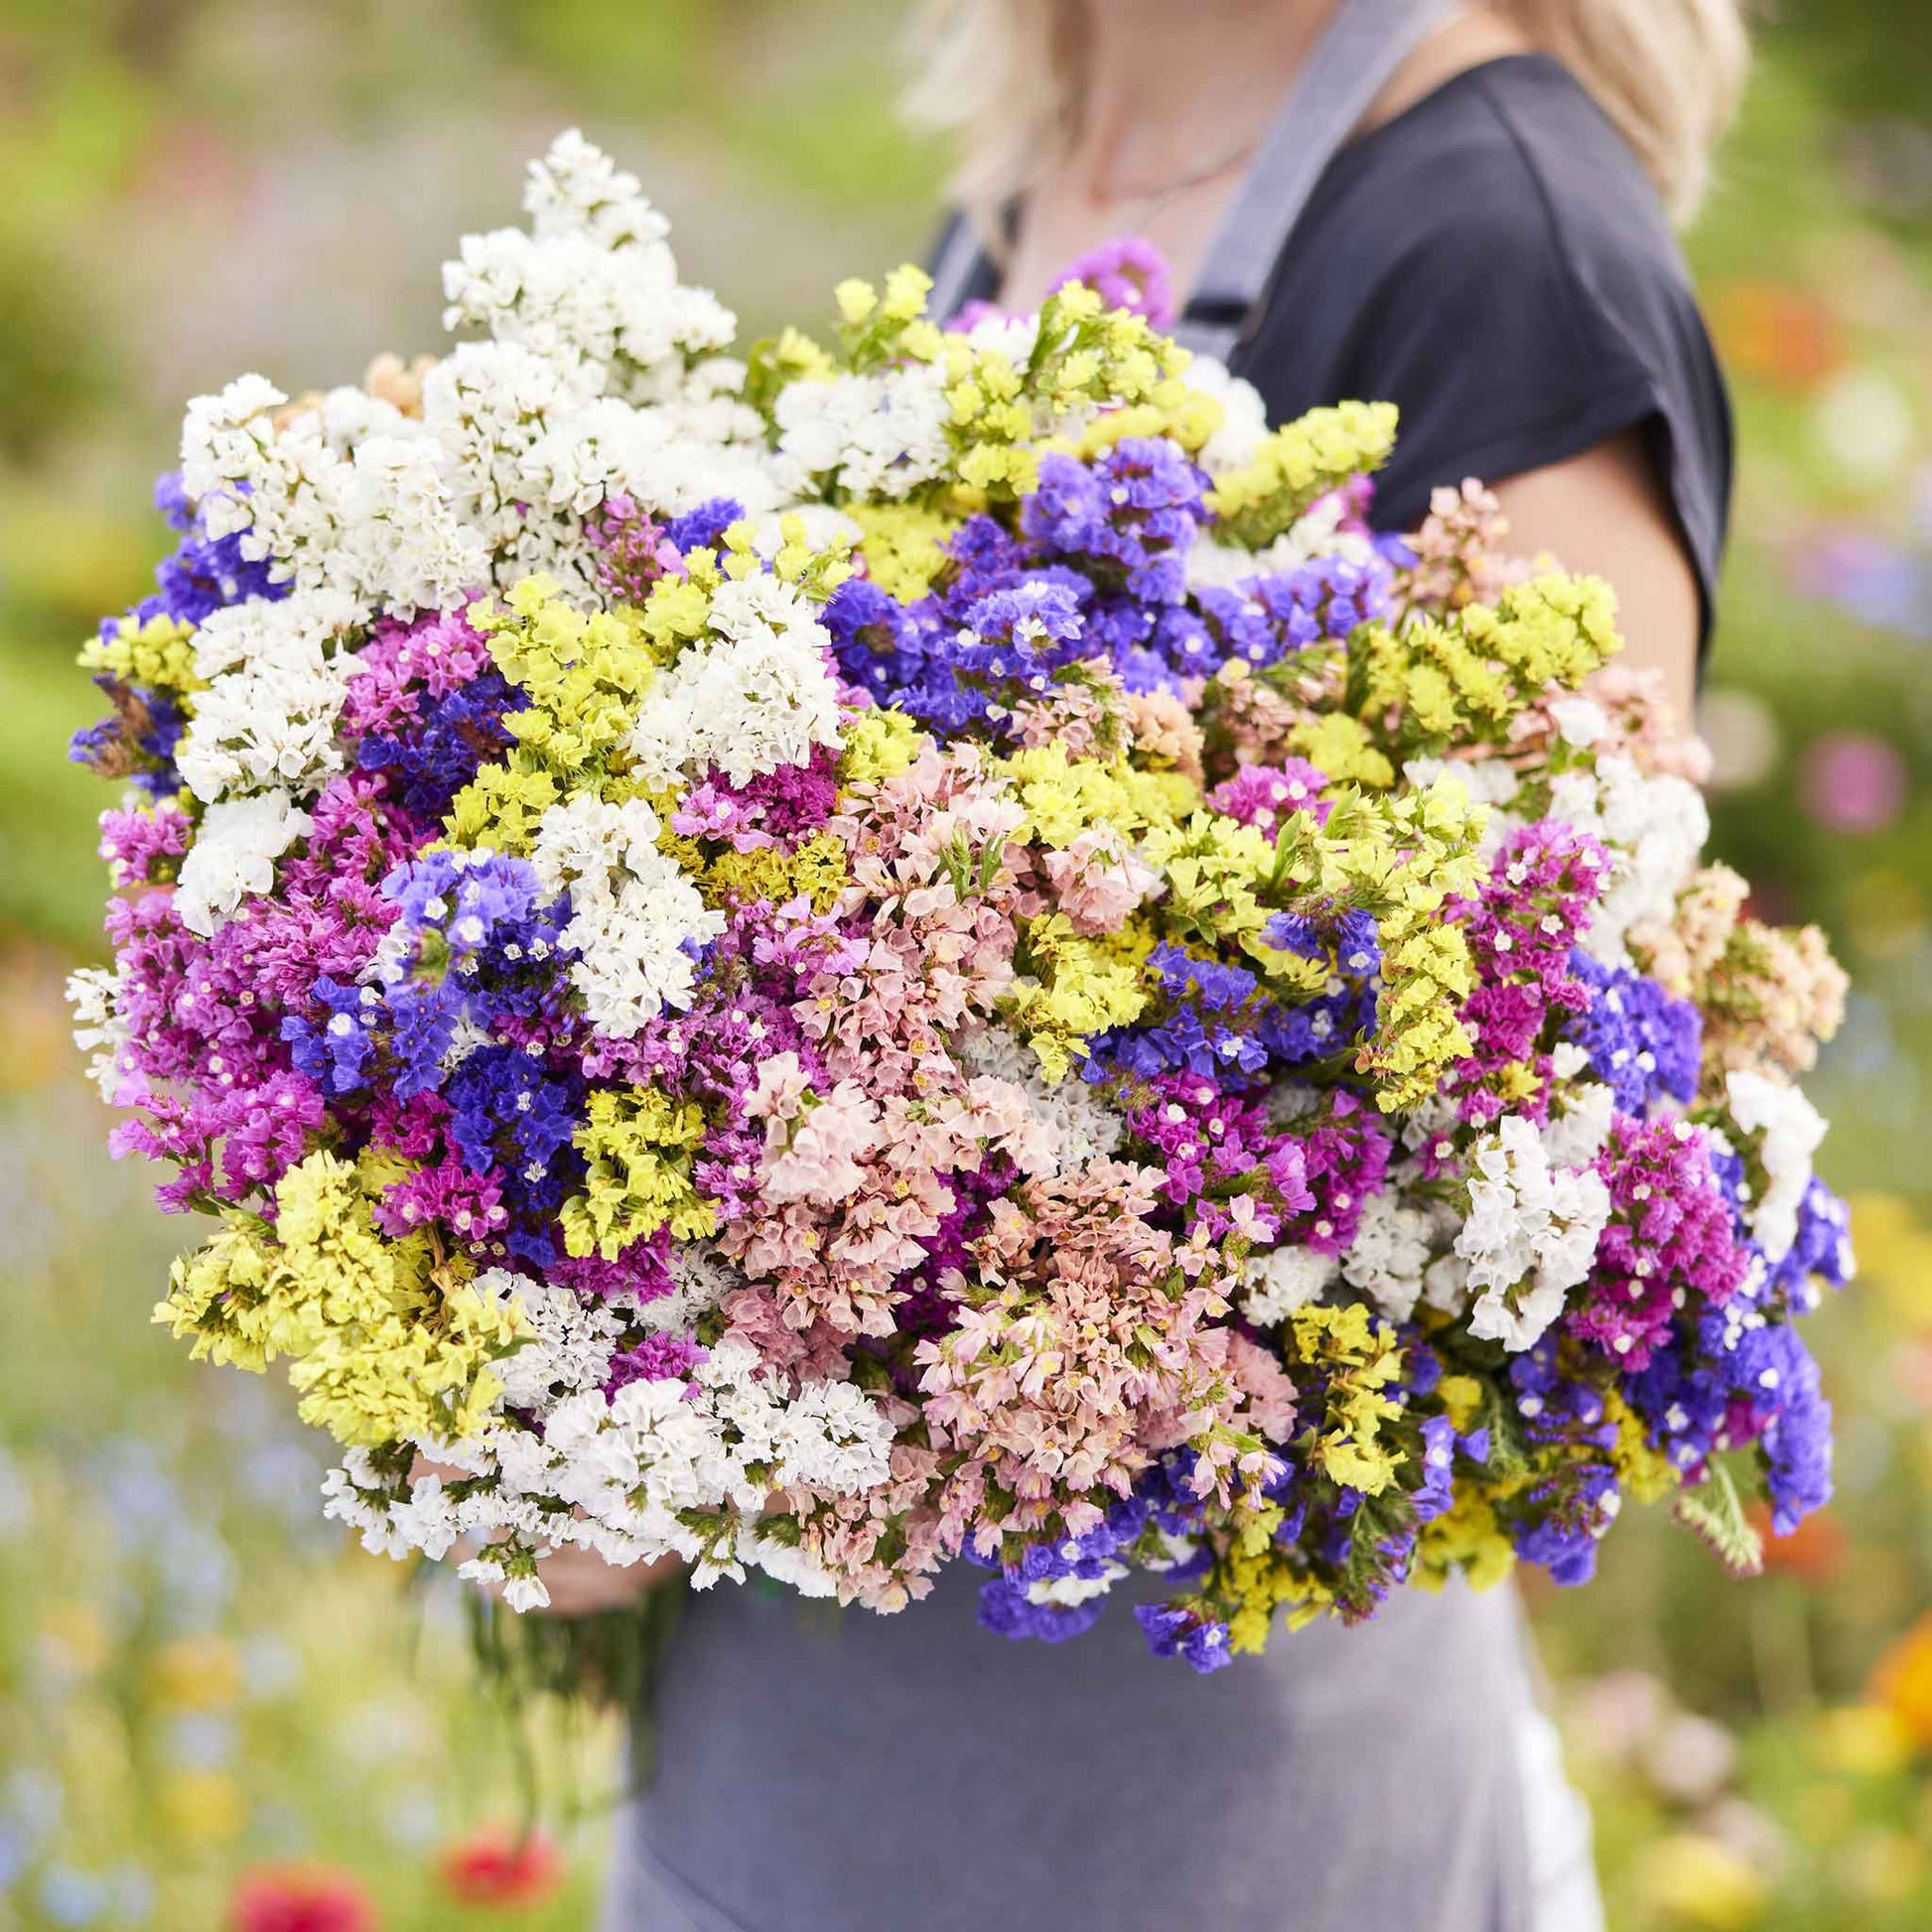 1 Package Star Anise Dried Flowers,real Dried Flowers,weddings